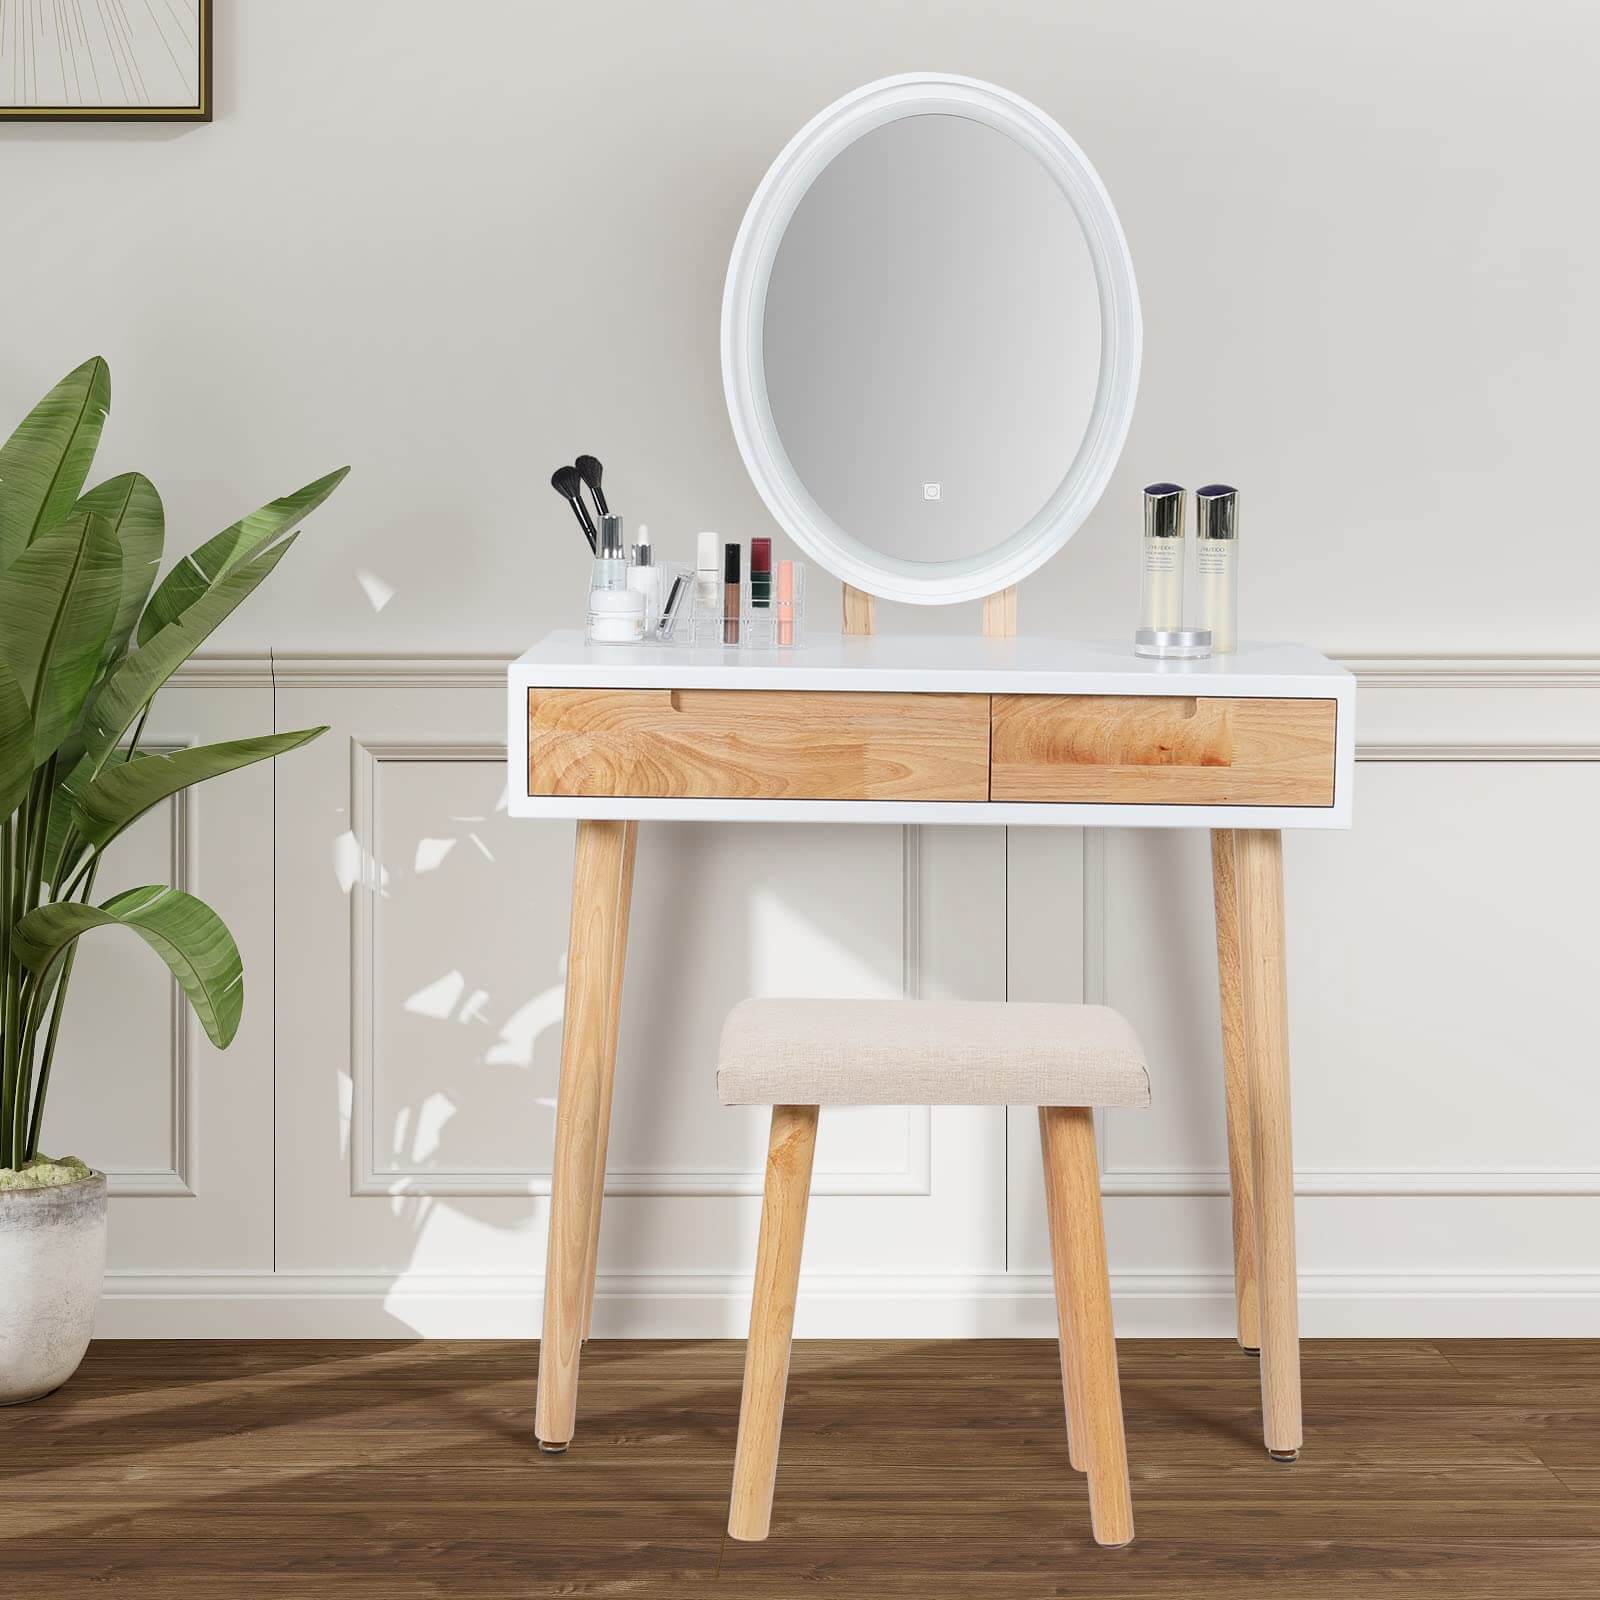 Elecwish Vanity Makeup Table Set with Adjustable LED Oval Mirror IF11213 display scene